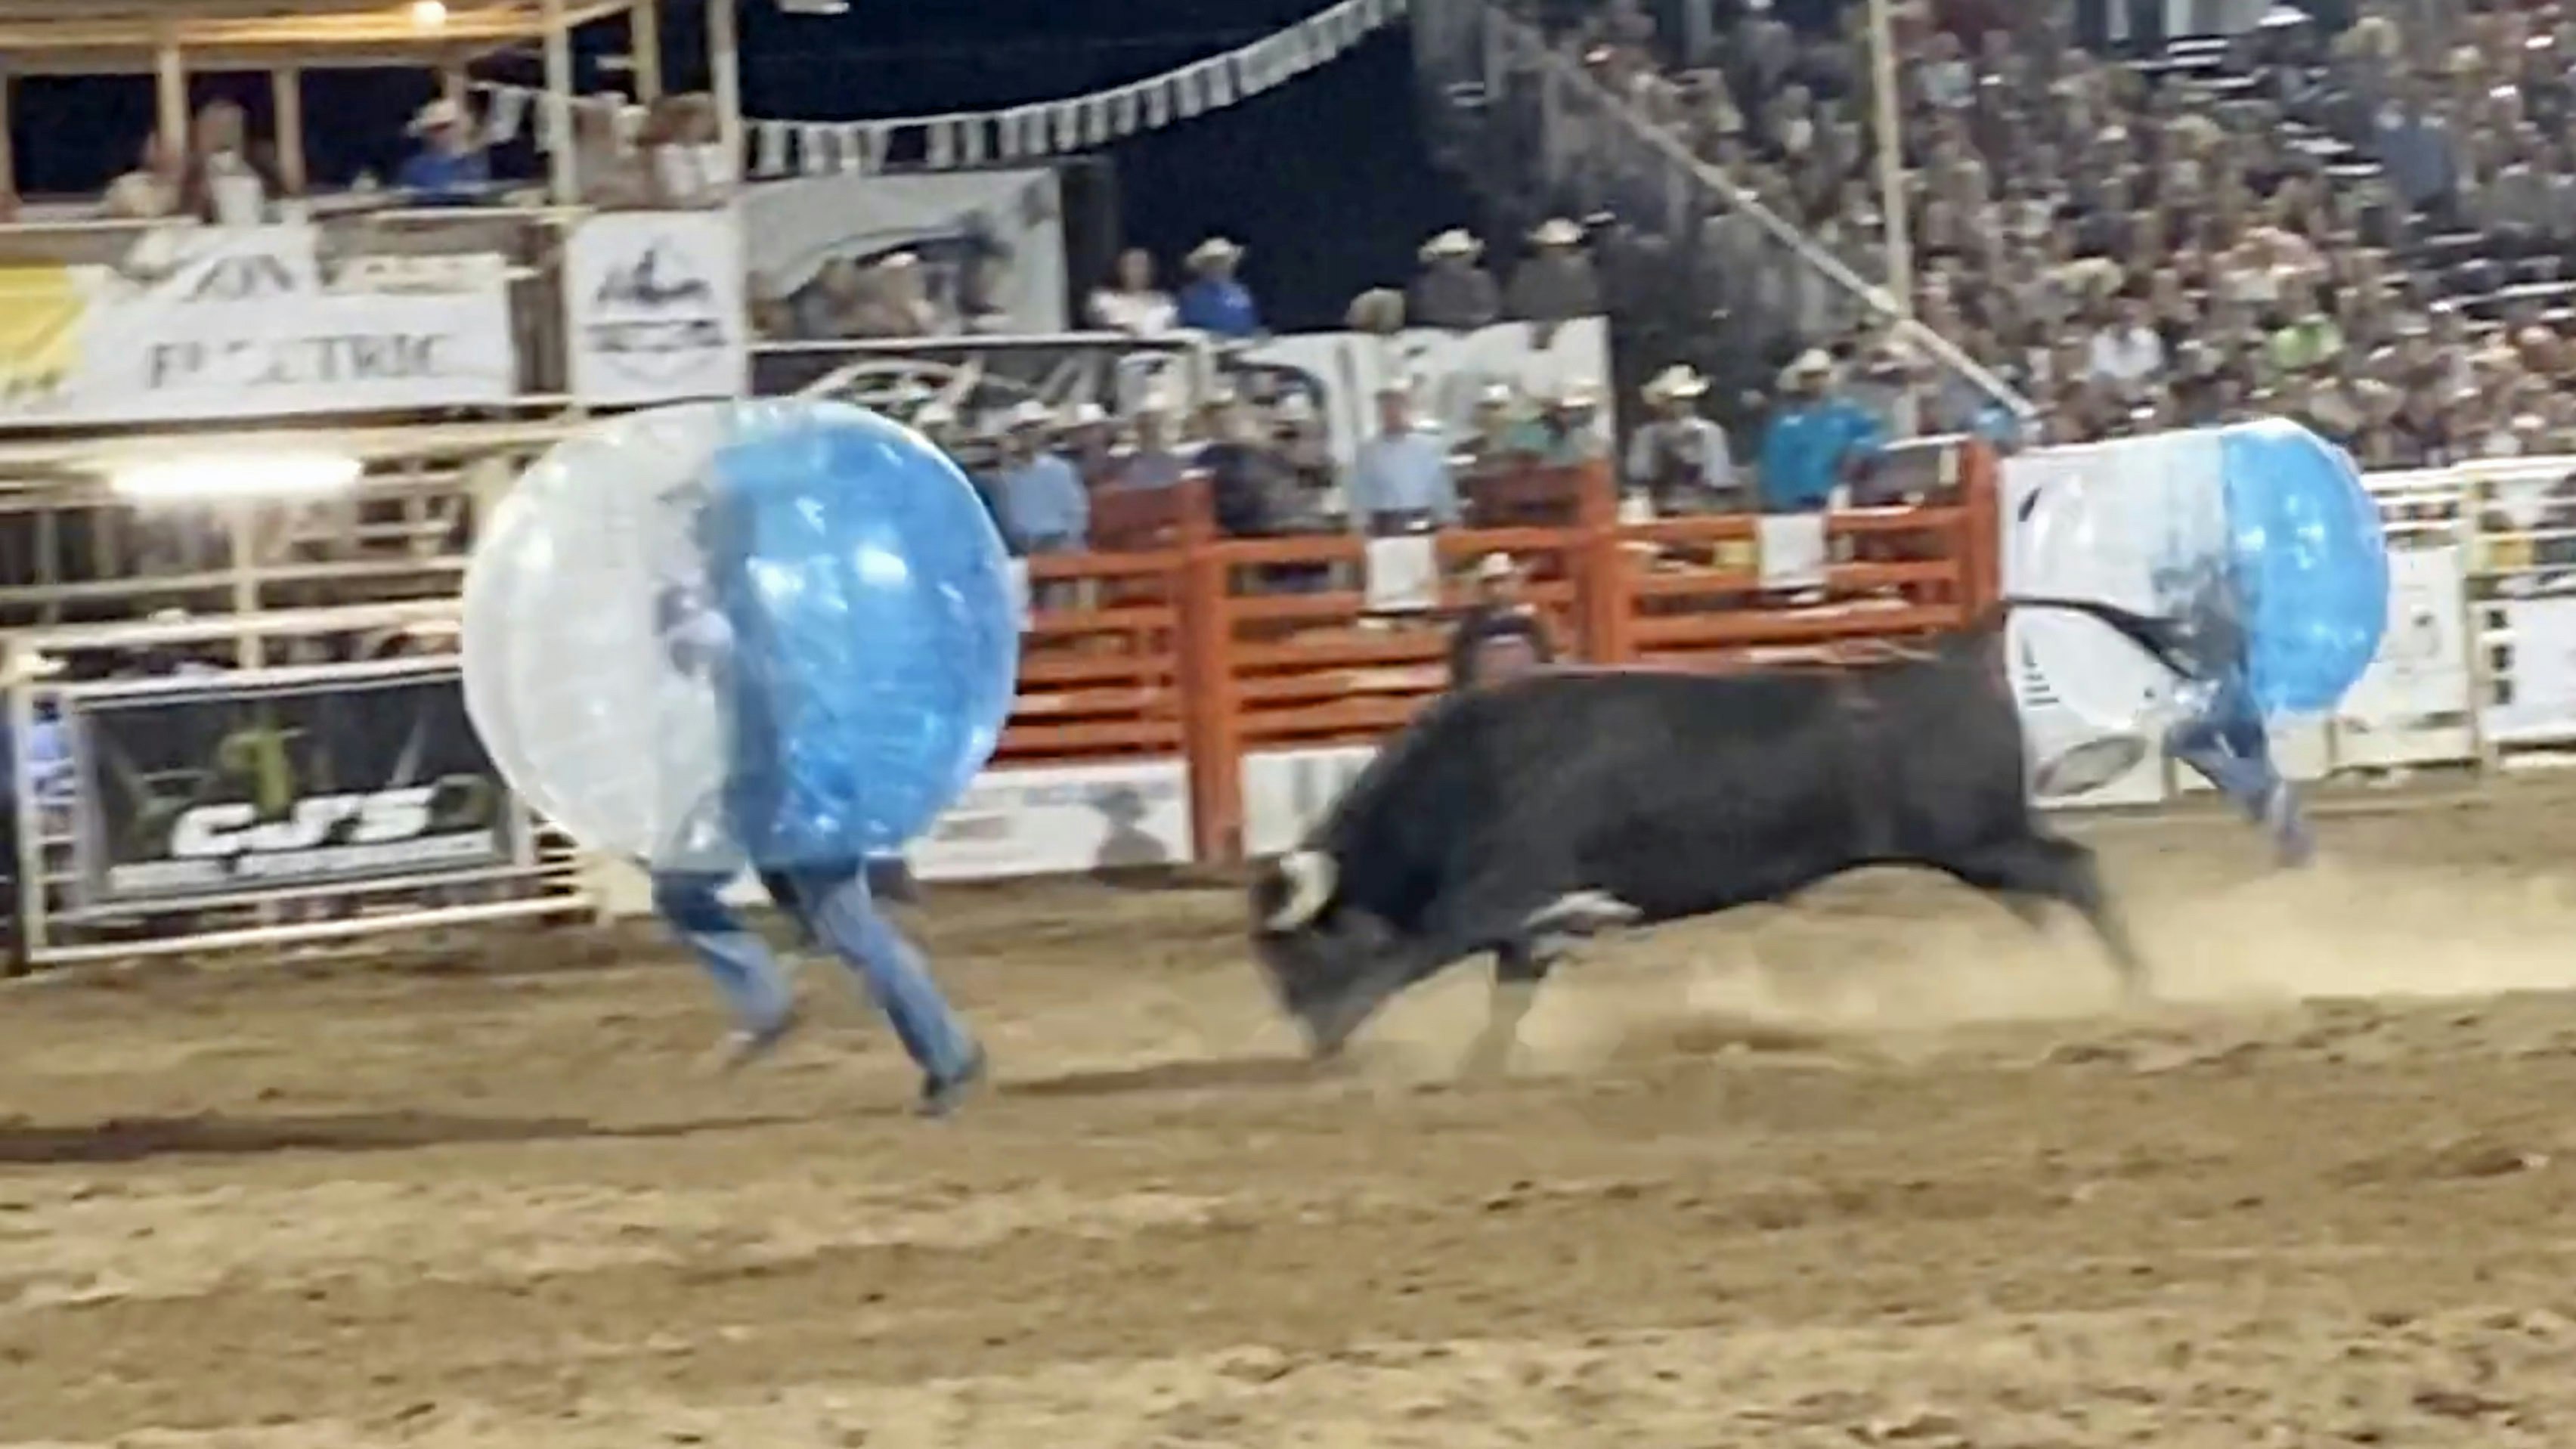 Bull ball rodeo 7 15 23